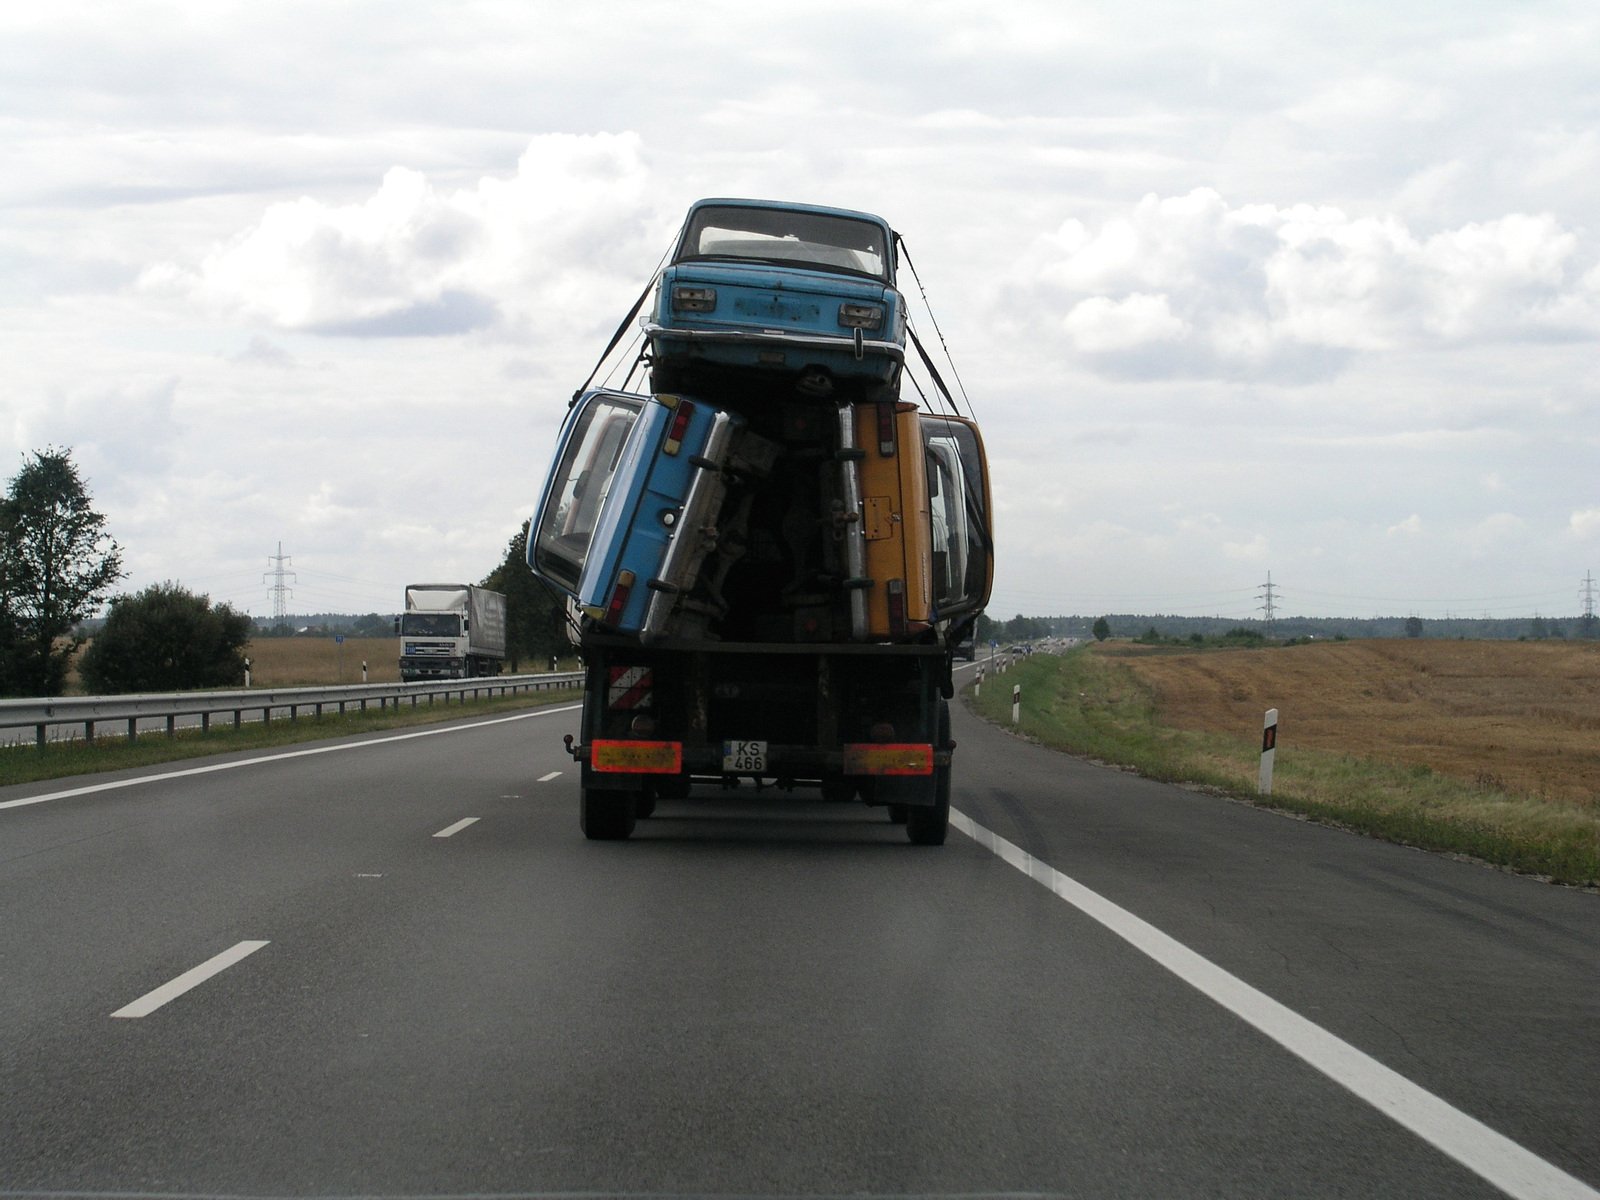 a blue truck is parked in a semi - truck lane